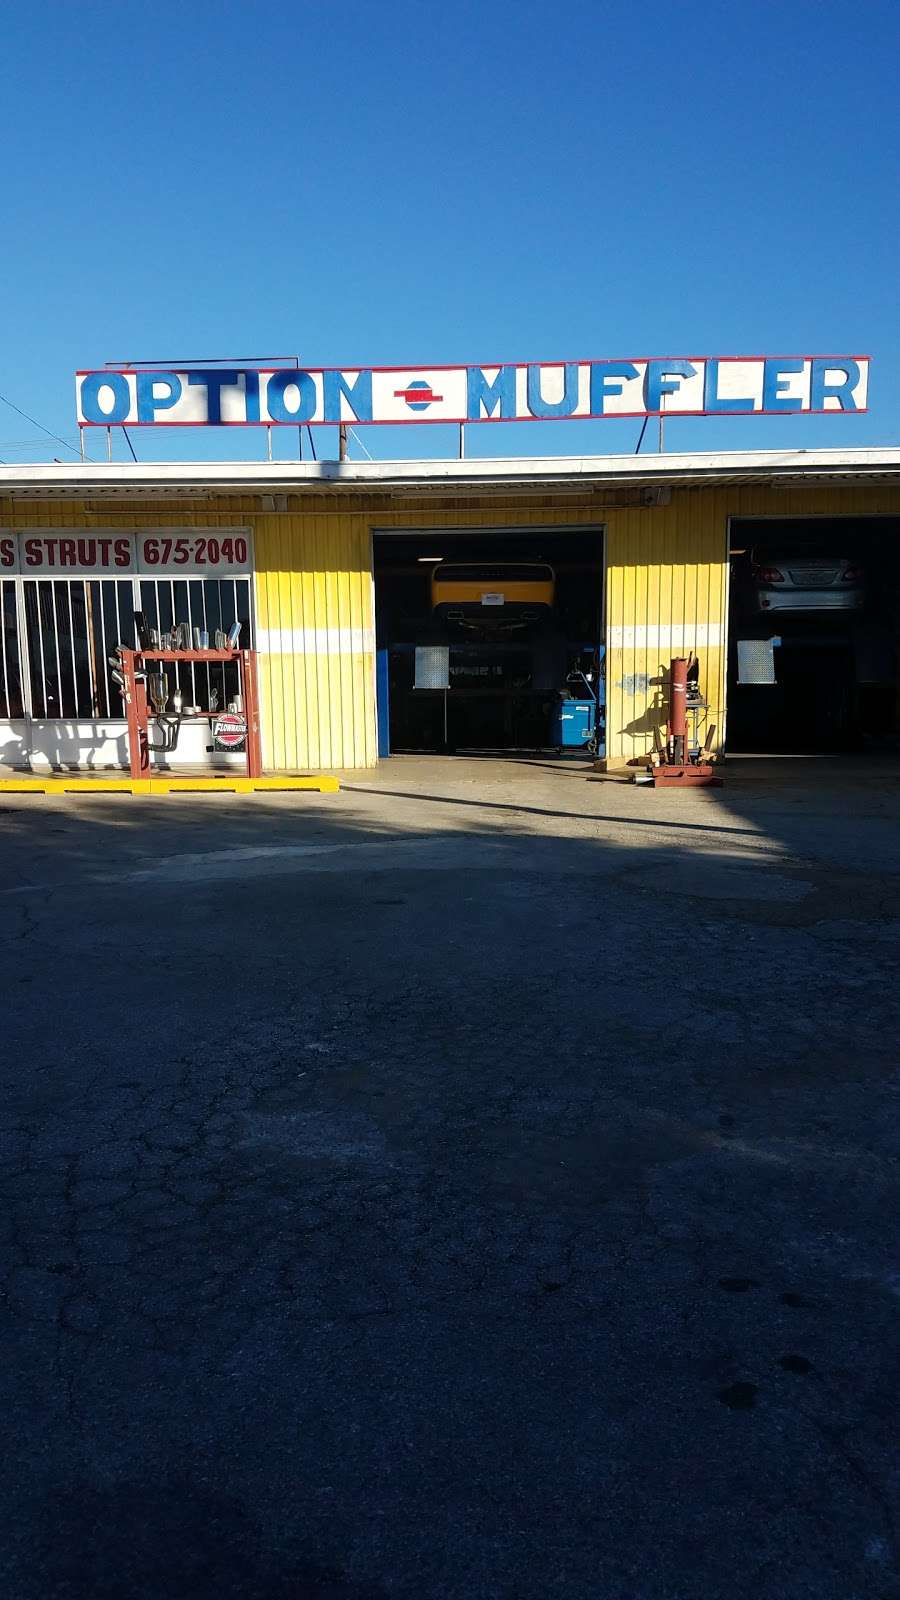 Option Muffler Shop | 7755 W US Hwy 90, San Antonio, TX 78227 | Phone: (210) 675-2040